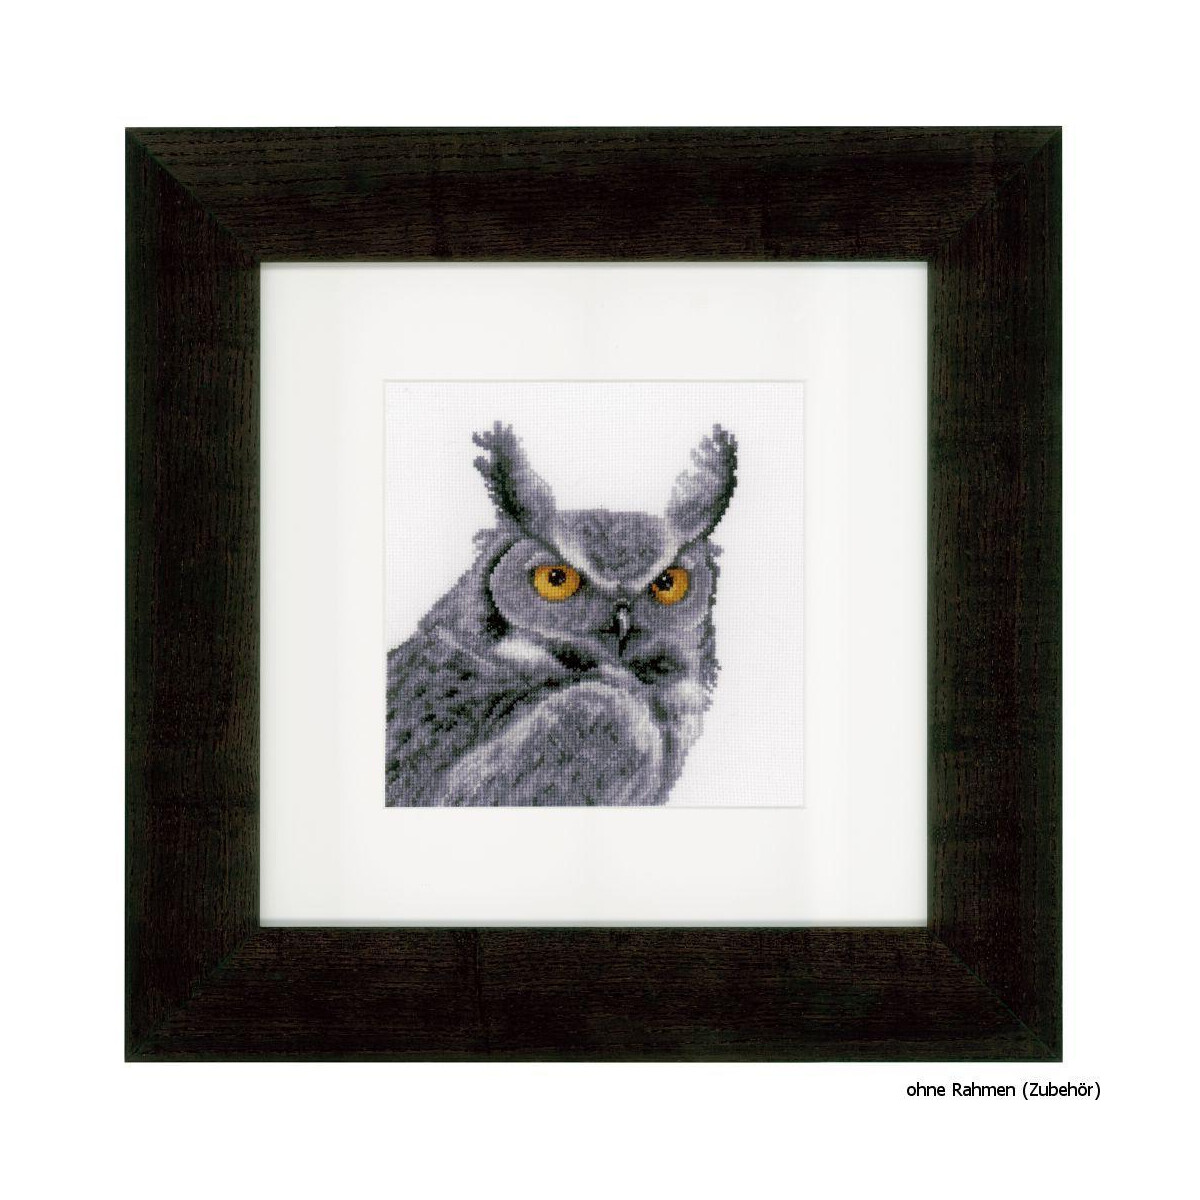 Paquet de broderie Vervaco comptant le motif "Grey owl